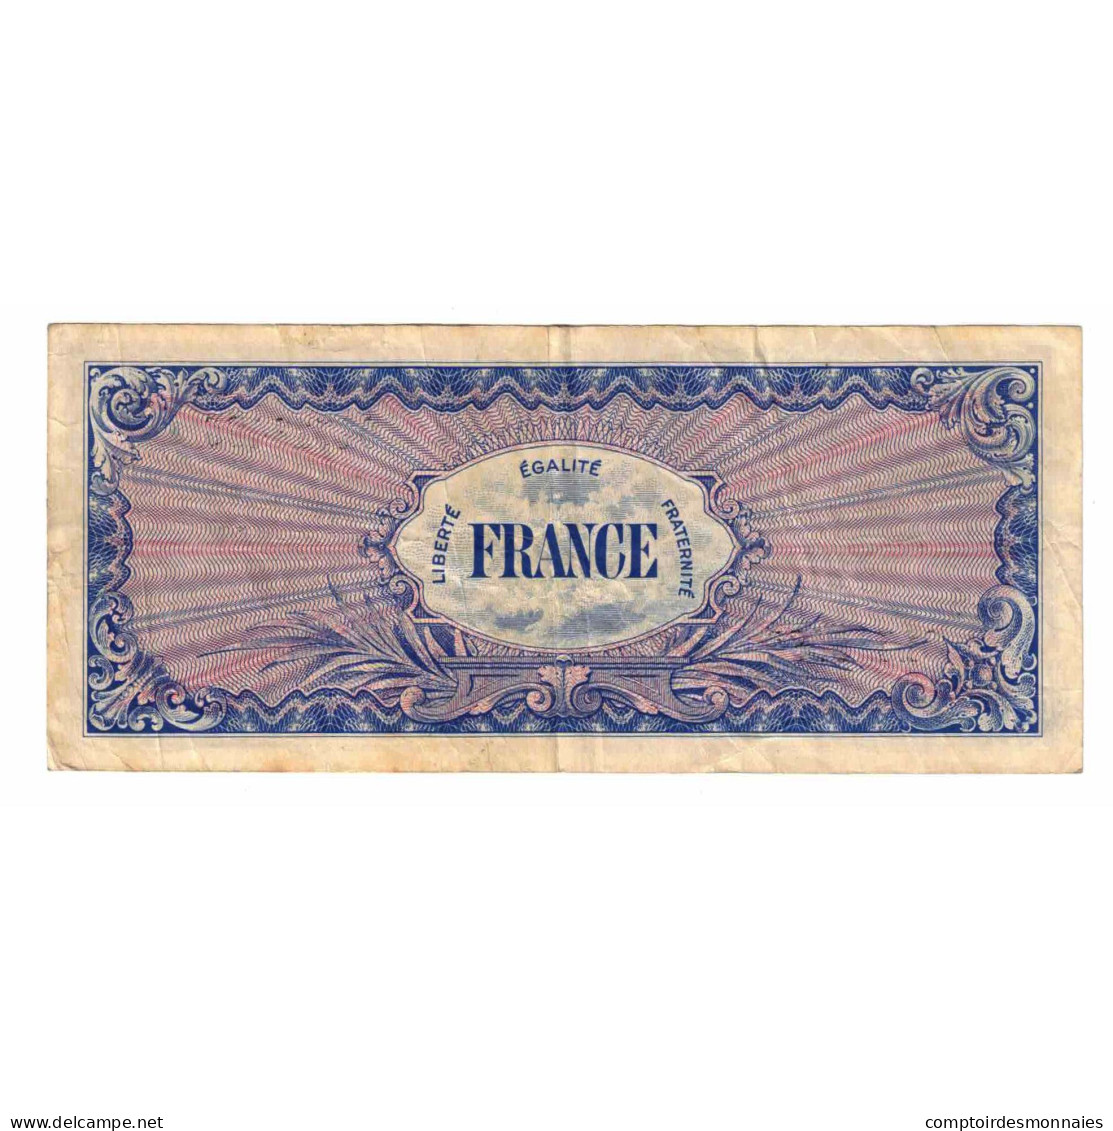 France, 100 Francs, 1945 Verso France, 1945, SERIE DE 1944, TB+ - 1945 Verso France